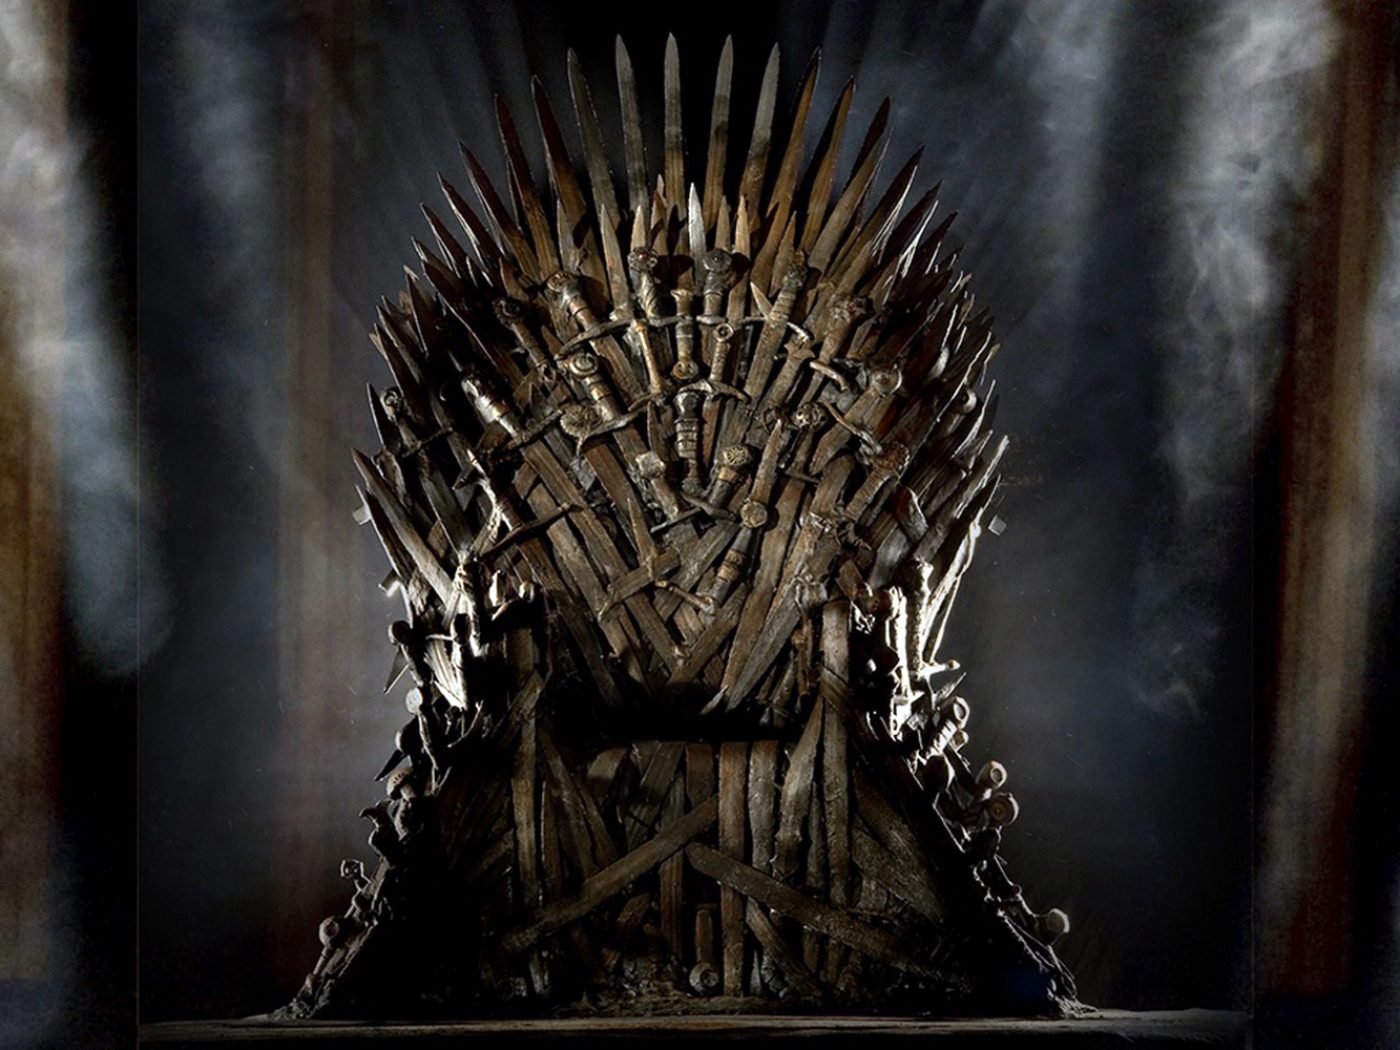 Game of Thrones” Season 8 Finale Recap: The Iron Throne